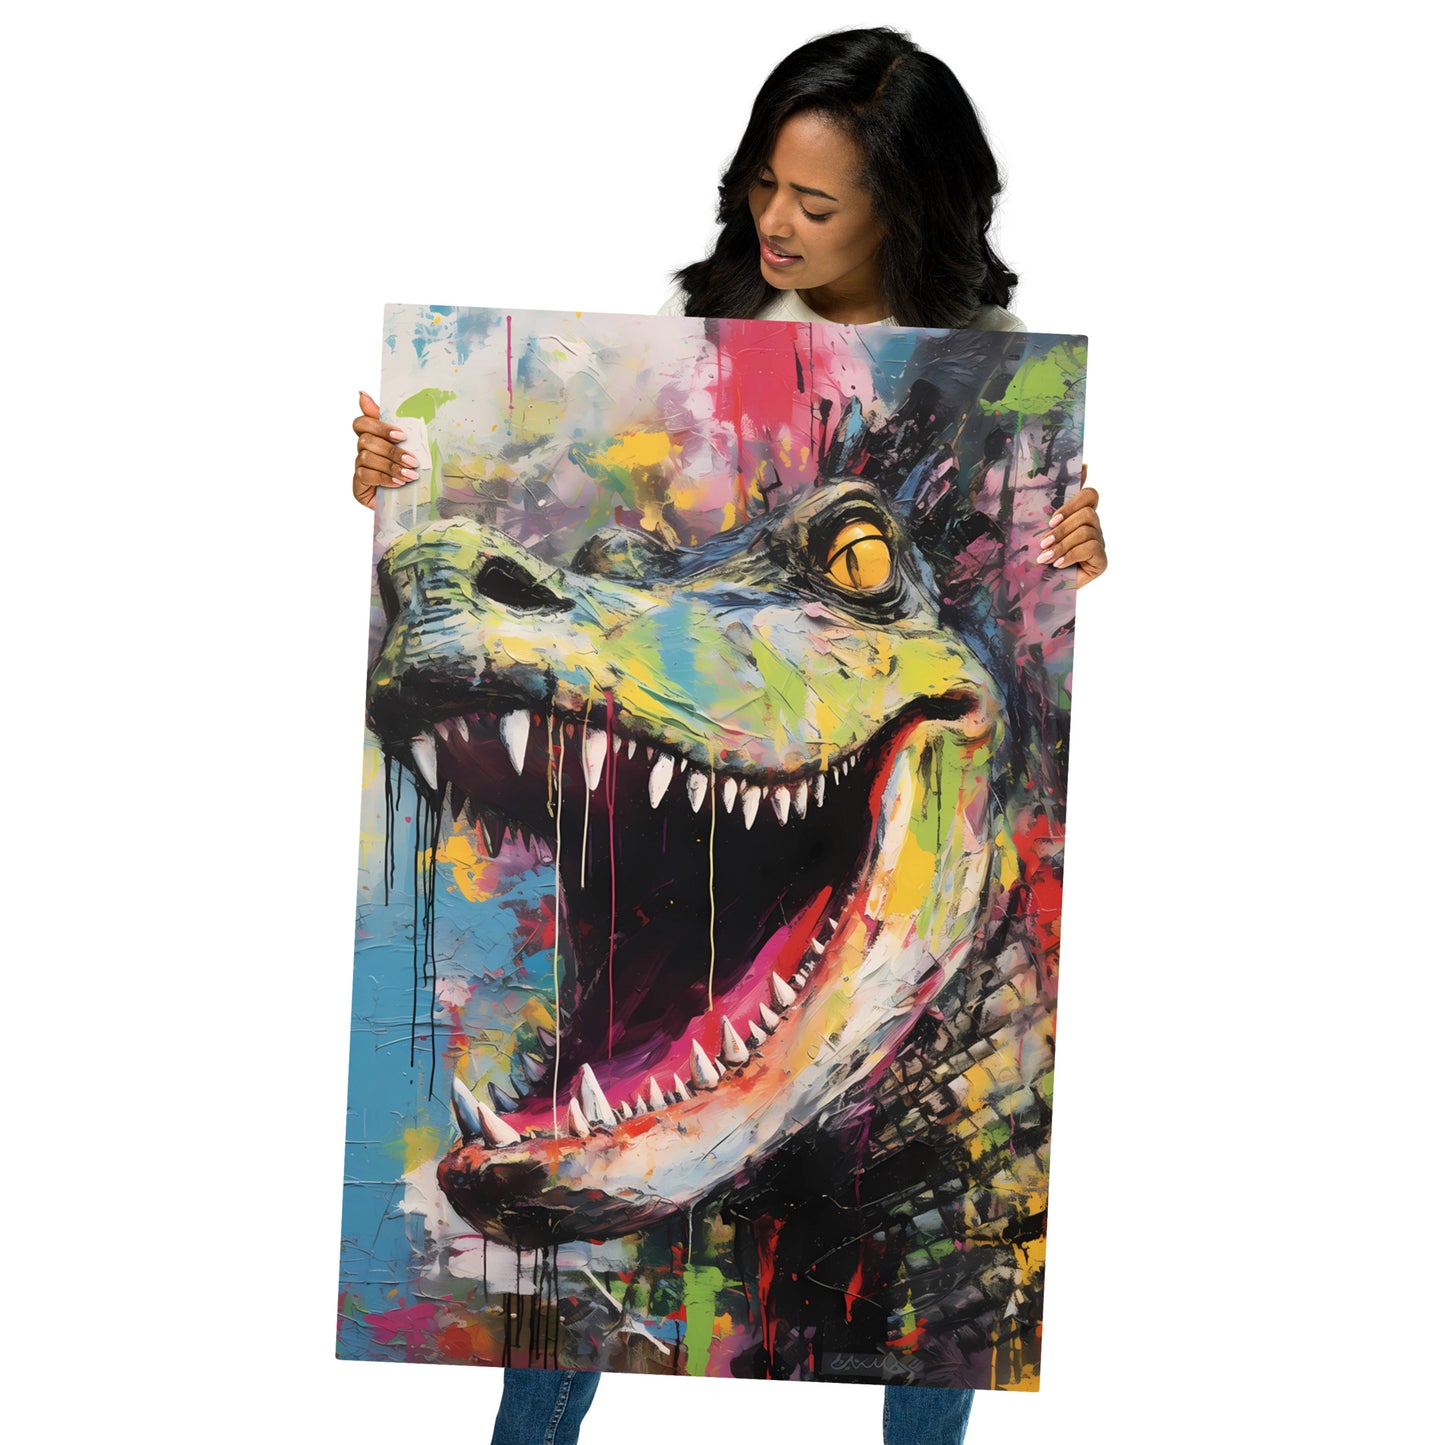 Vibrant abstract dinosaur wall art with striking colors and menacing expression